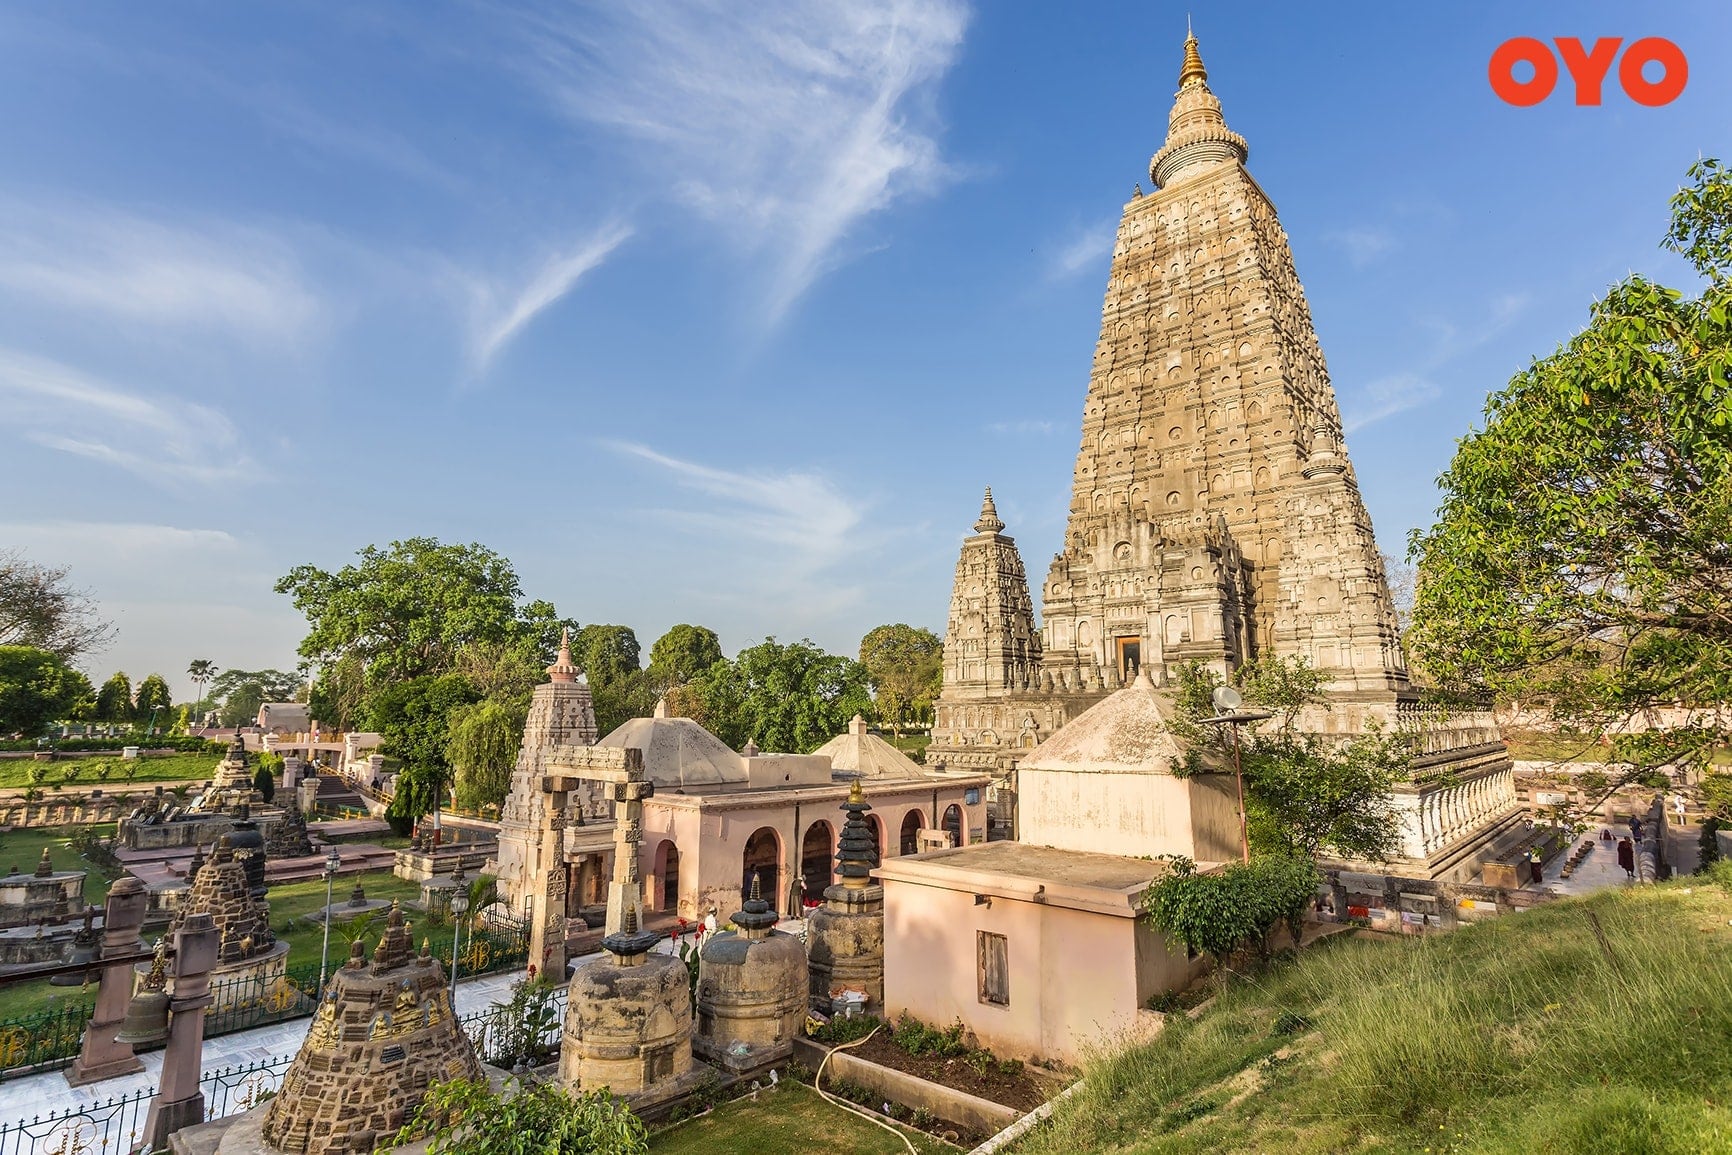 Bodhgaya - one of the top pilgrimage sites in India